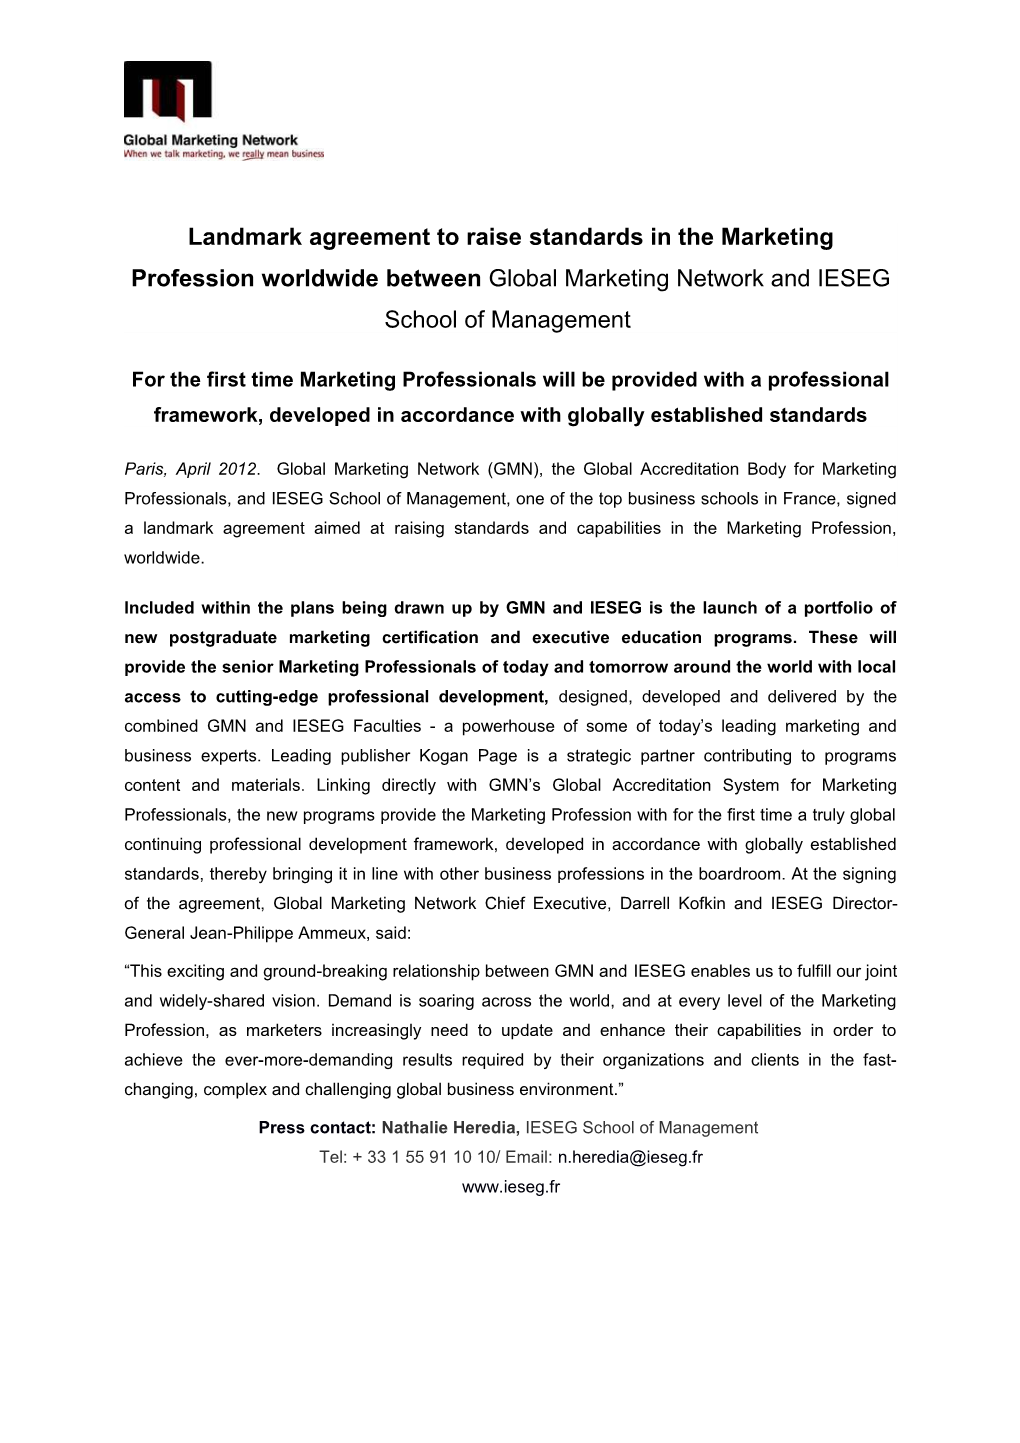 Landmark Agreement to Raise Standards in the Marketing Profession Worldwidebetweenglobal